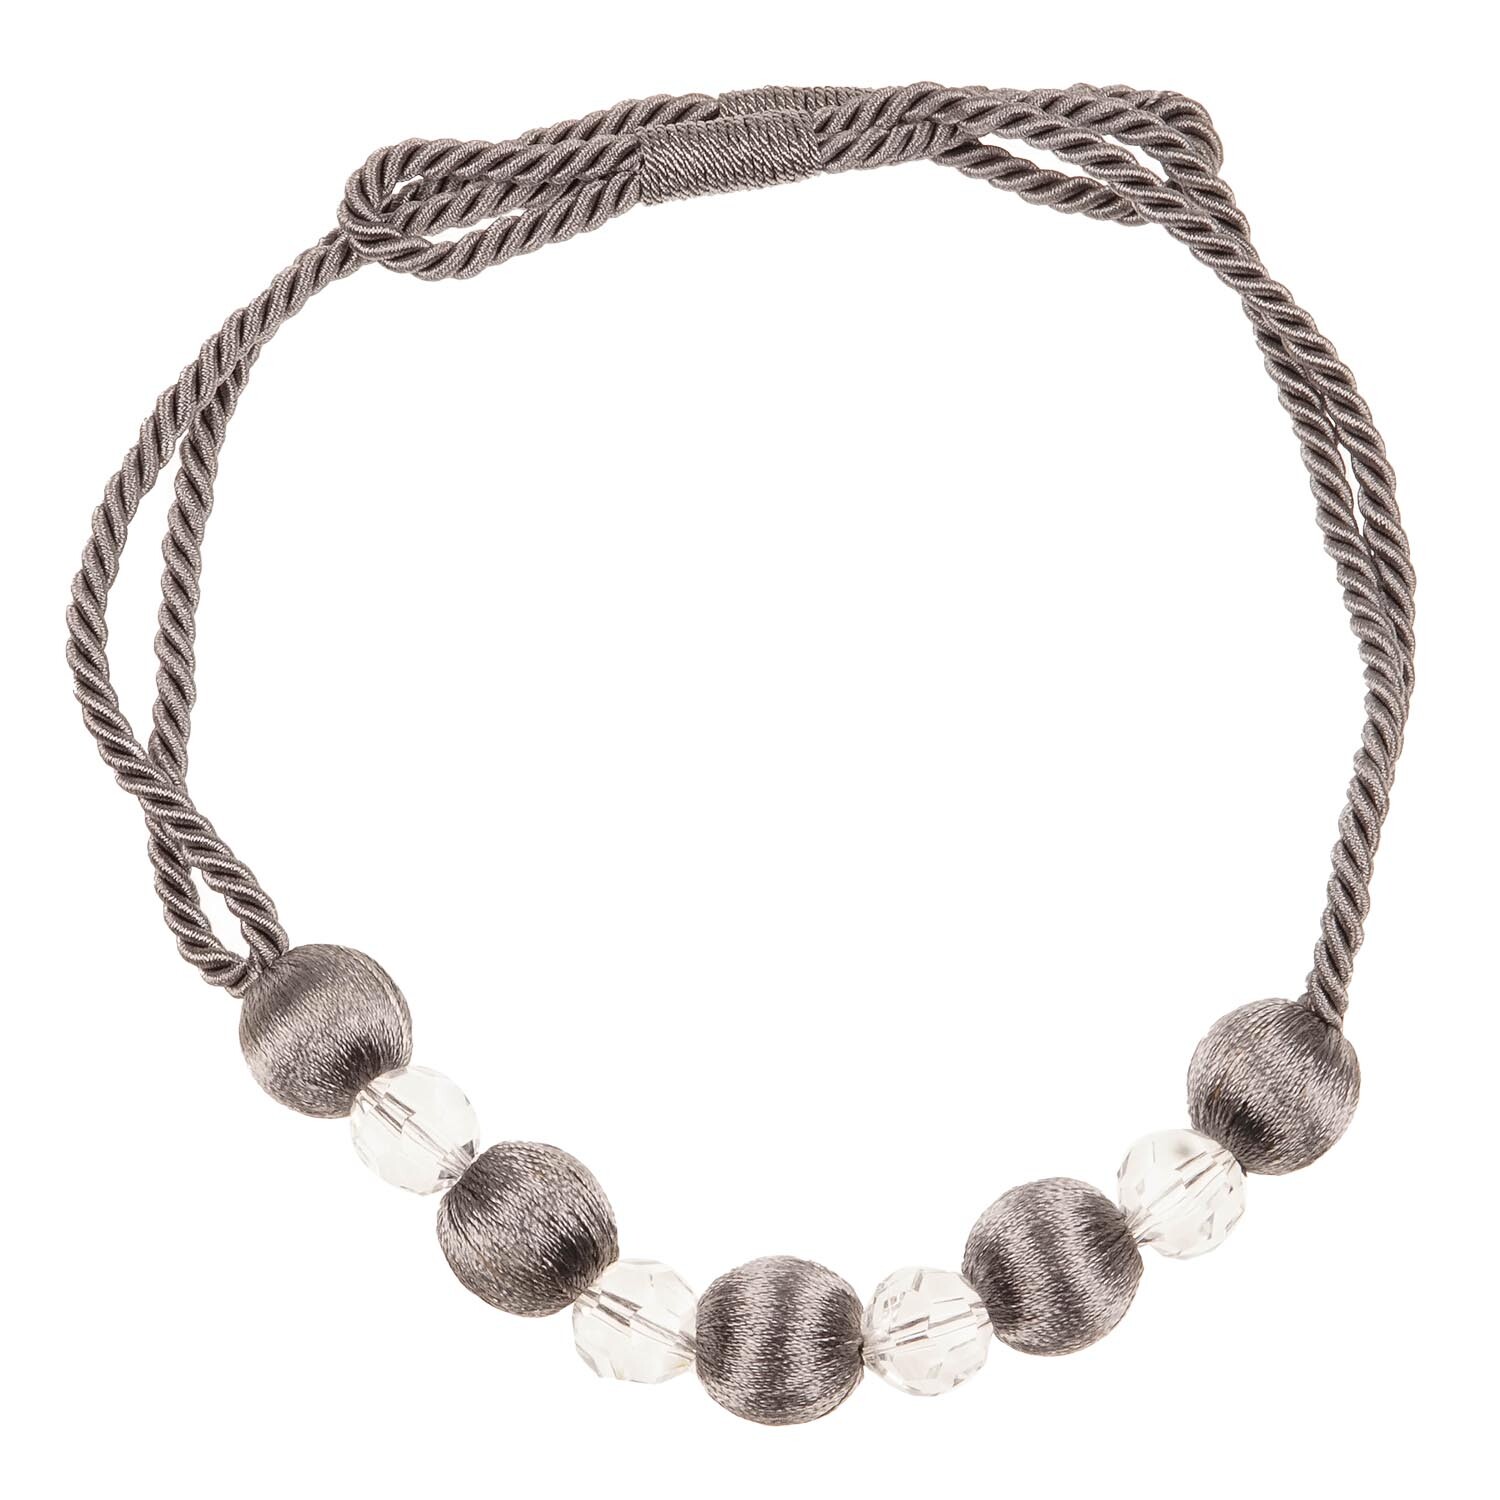 Bead Covered Yarn Tieband - Silver Image